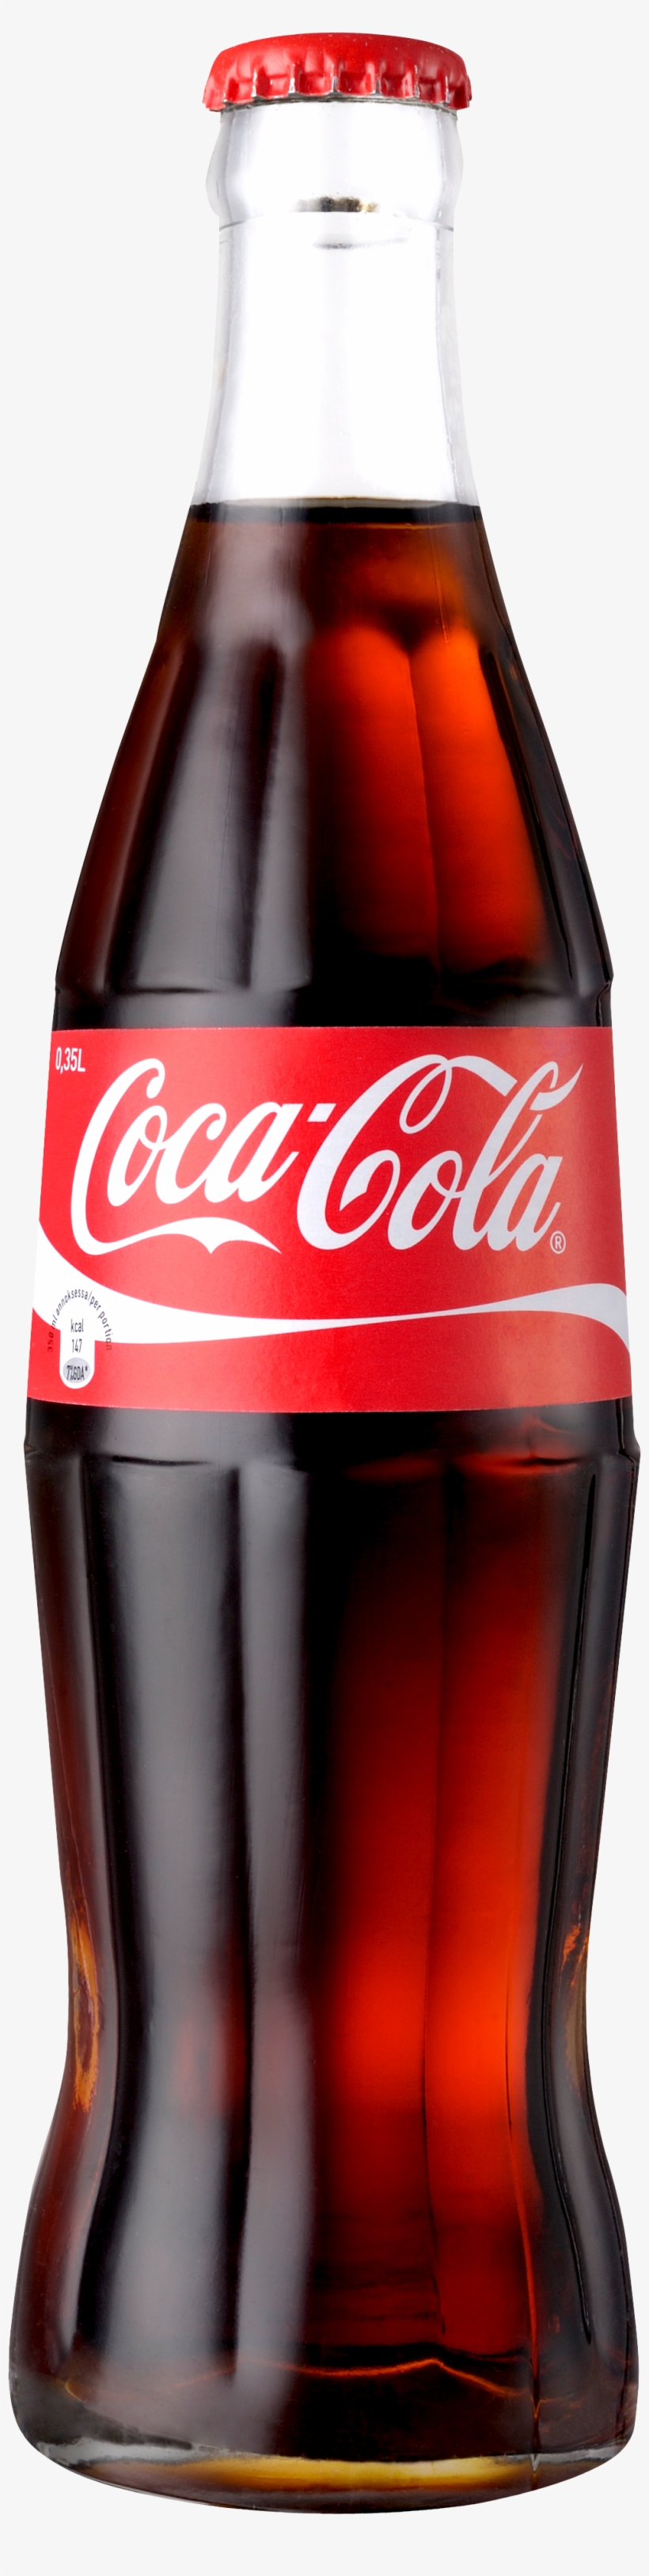 Coca Cola Png Image - Coca Cola Bottle Chilled, transparent png #1484349